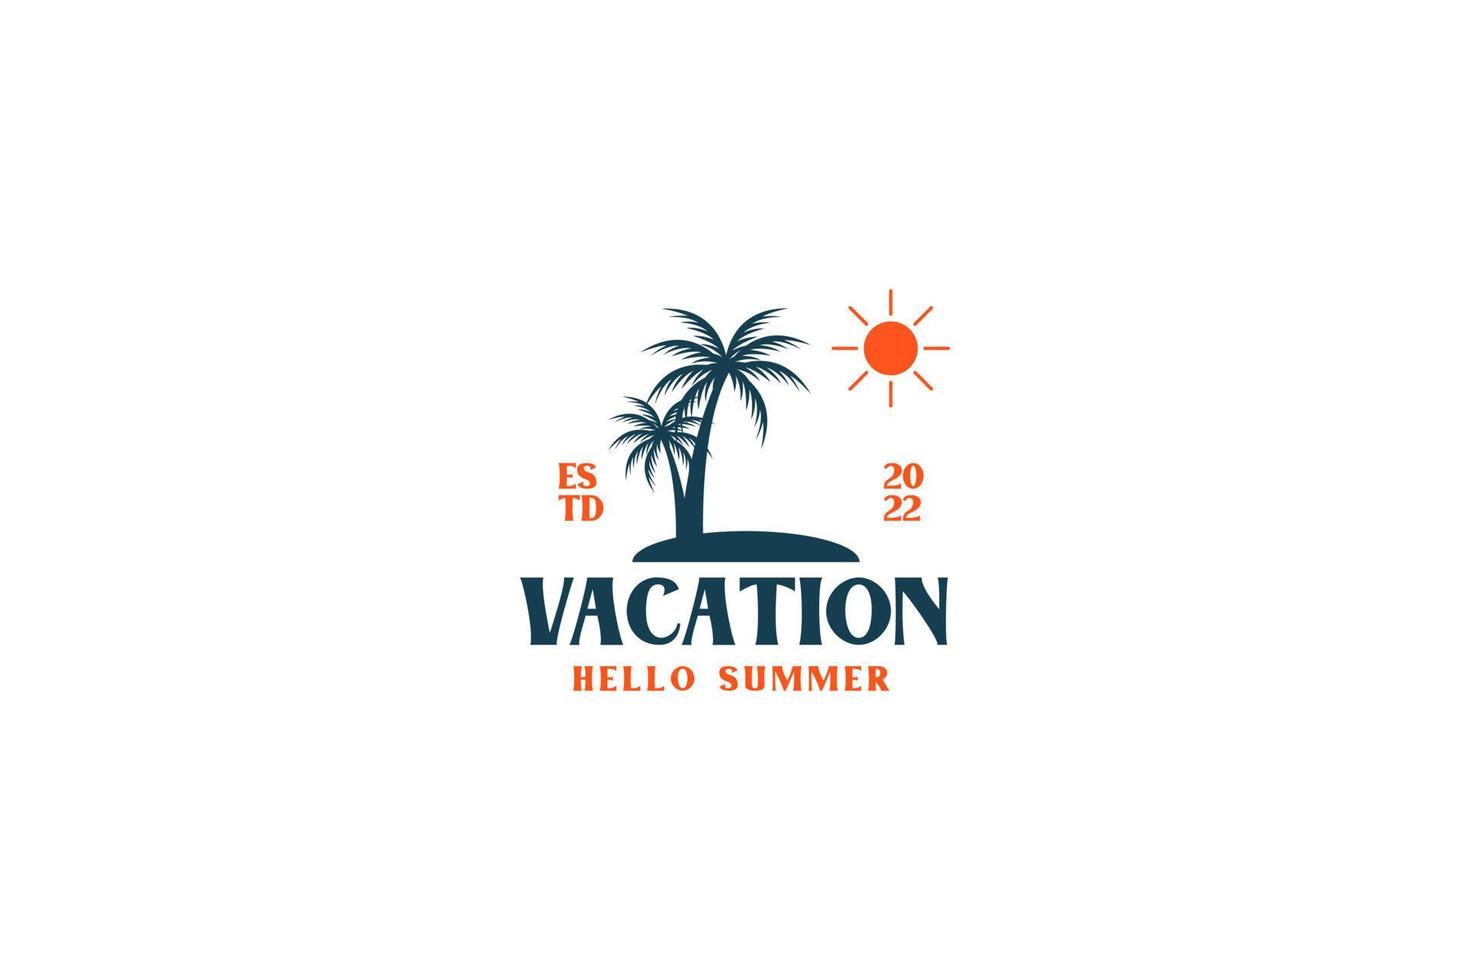 modelo de design de logotipo de férias na praia vetor